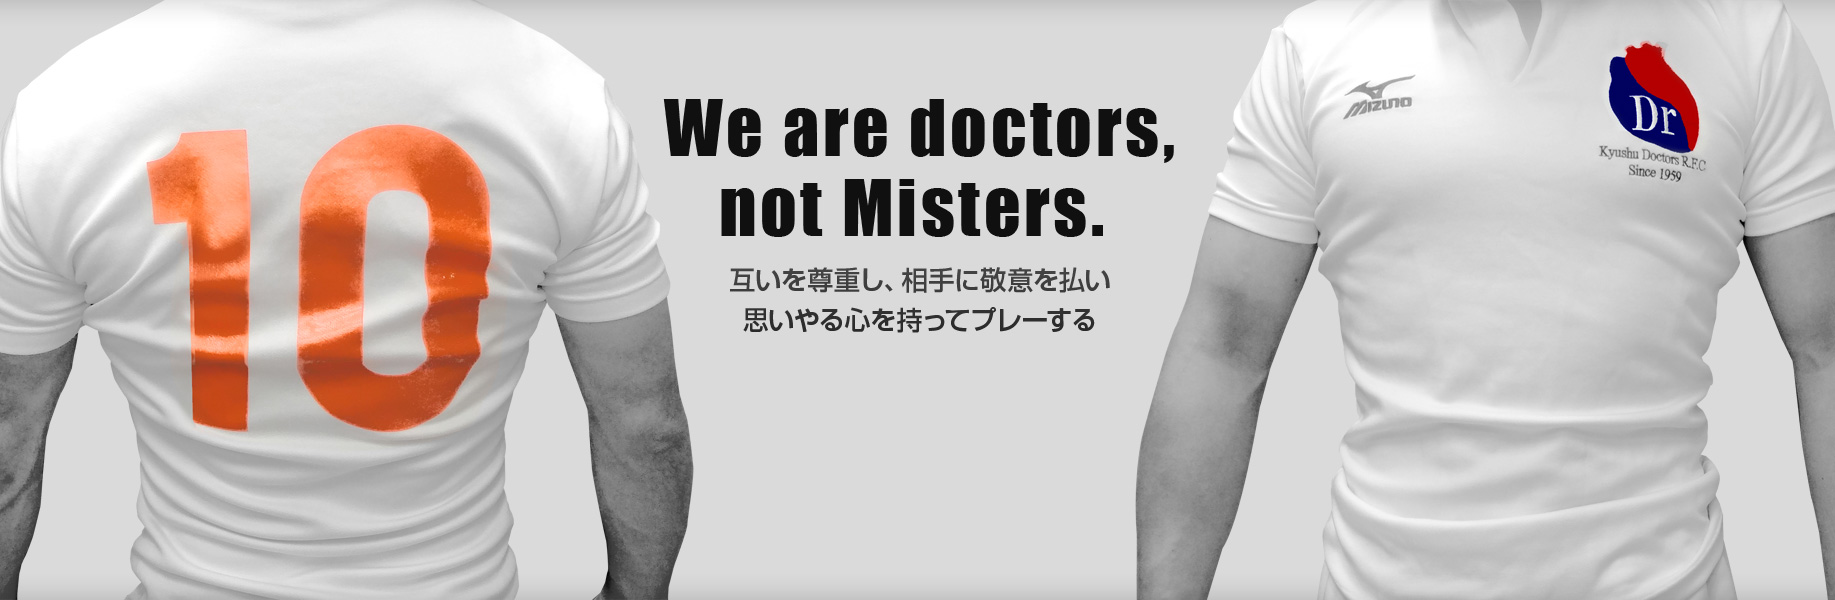 We are doctors,not Misters. 互いを尊重し、相手に敬意を払い思いやる心を持ってプレーする